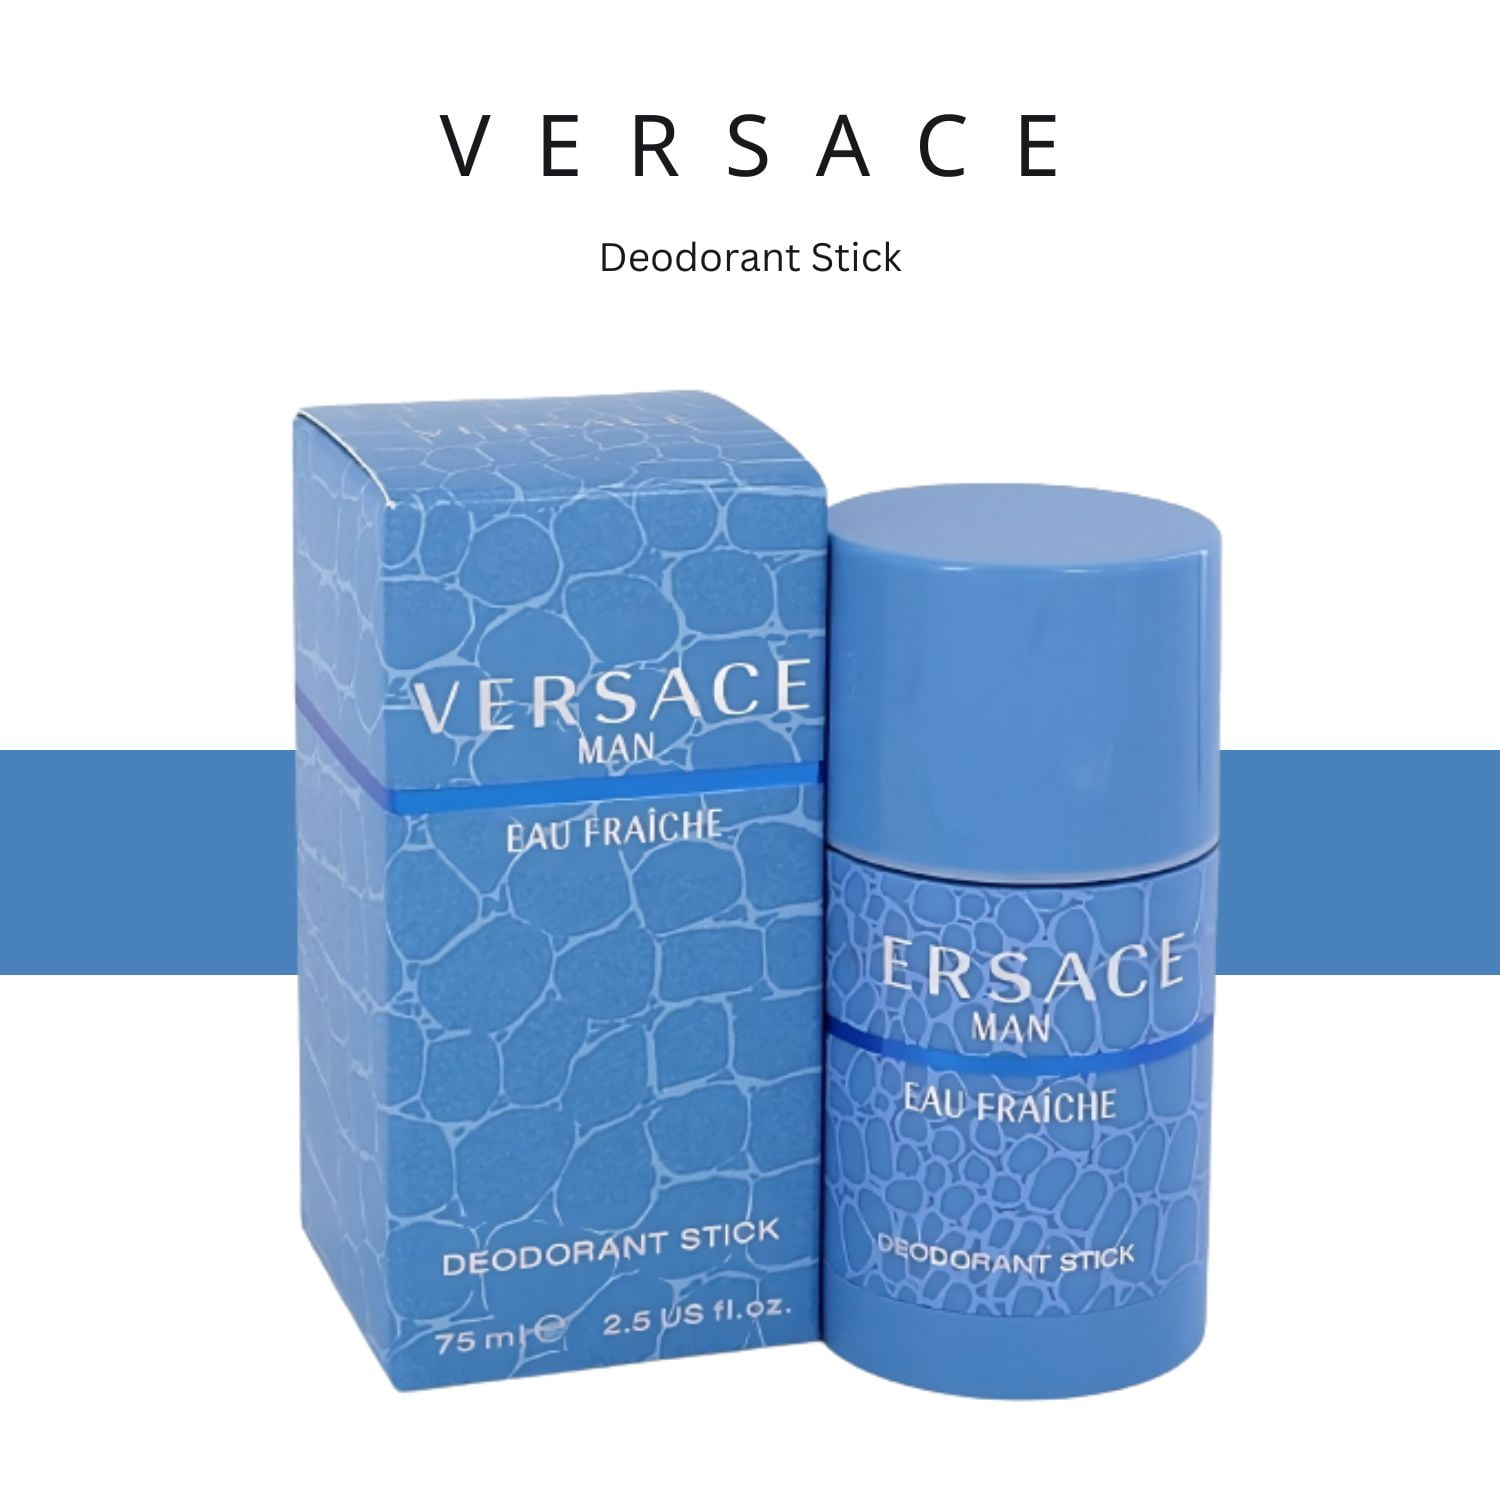 Versace Man Fraiche Deodorant oz. - Walmart.com